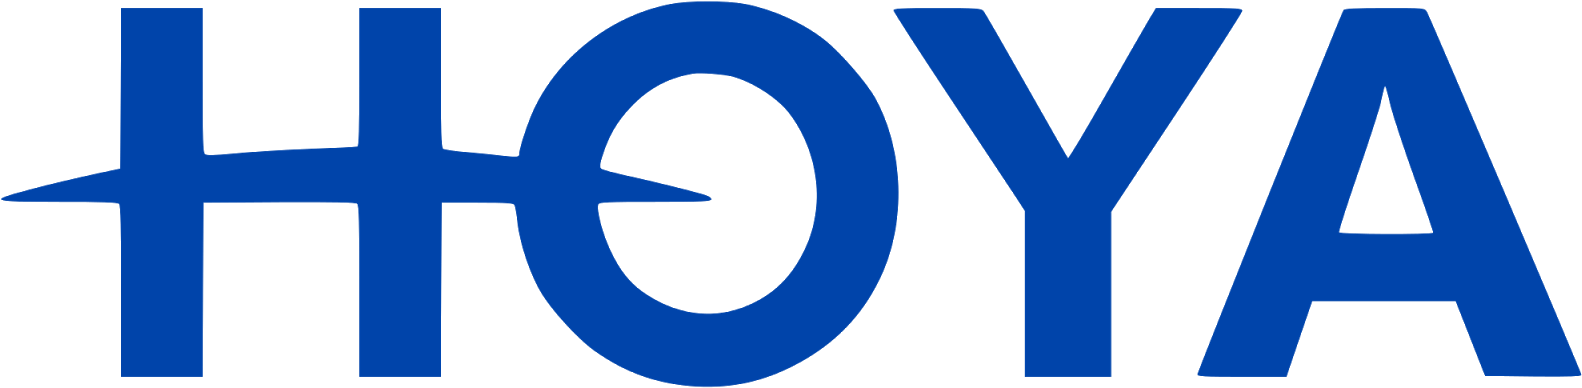 Unnamed3 - Hoya Logo Png (1600x408)